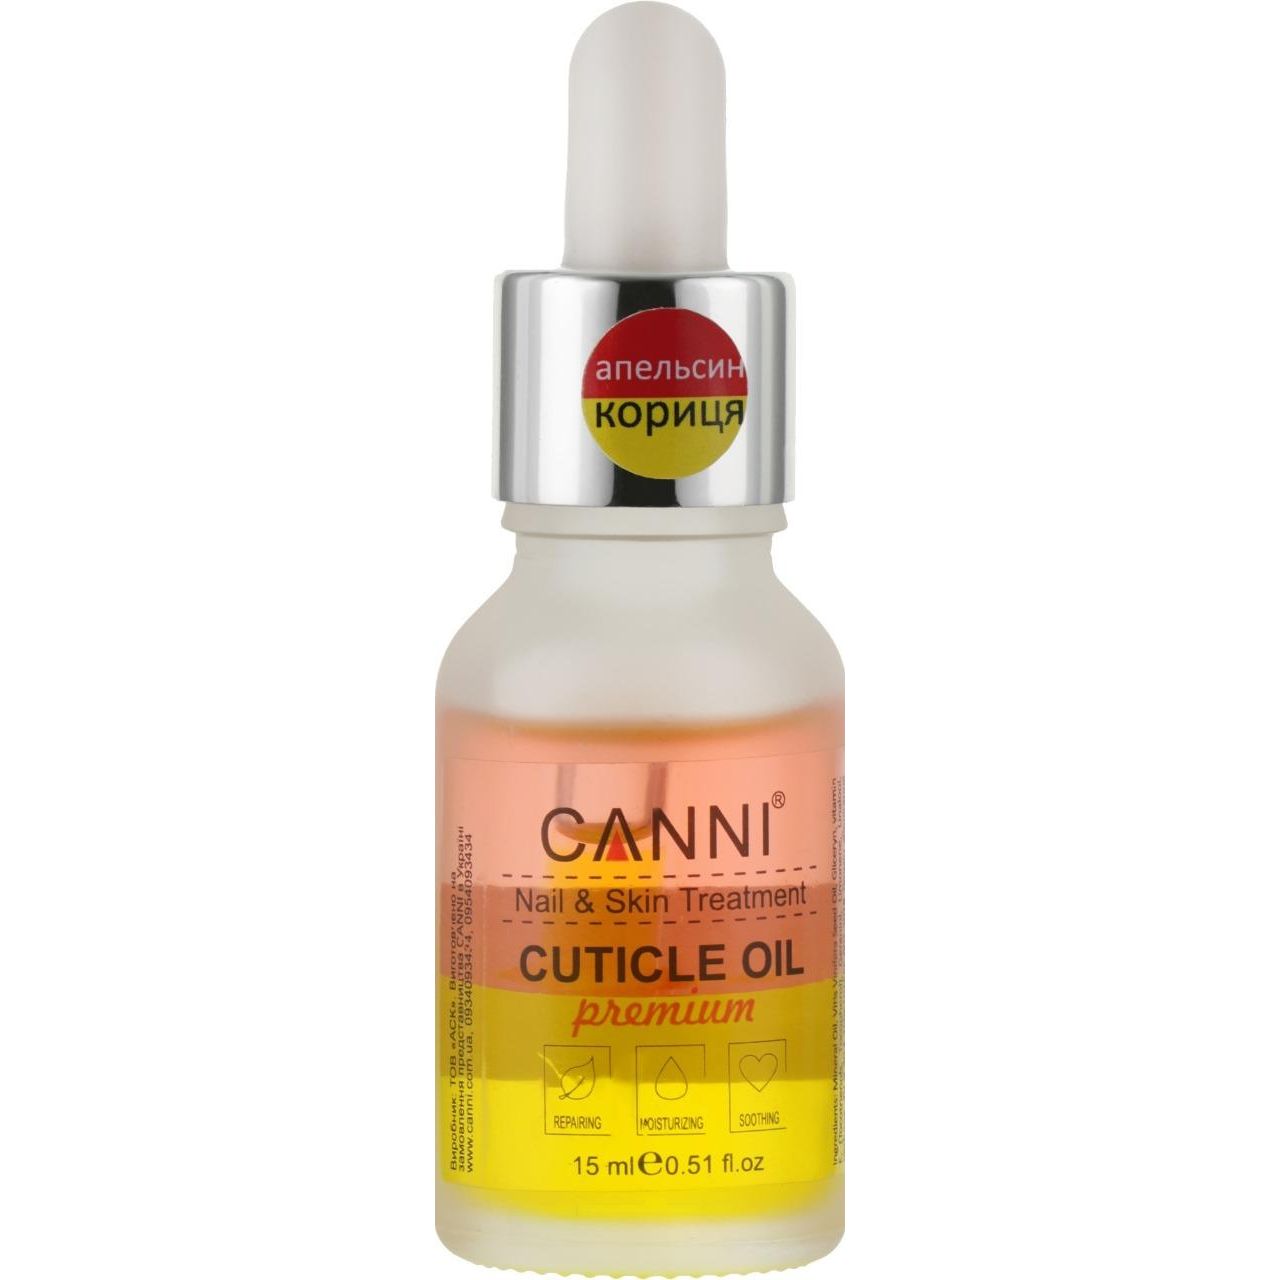 Олійка для кутикули Canni Premium Cuticle Oil двофазна Апельсин-Кориця 15 мл - фото 1